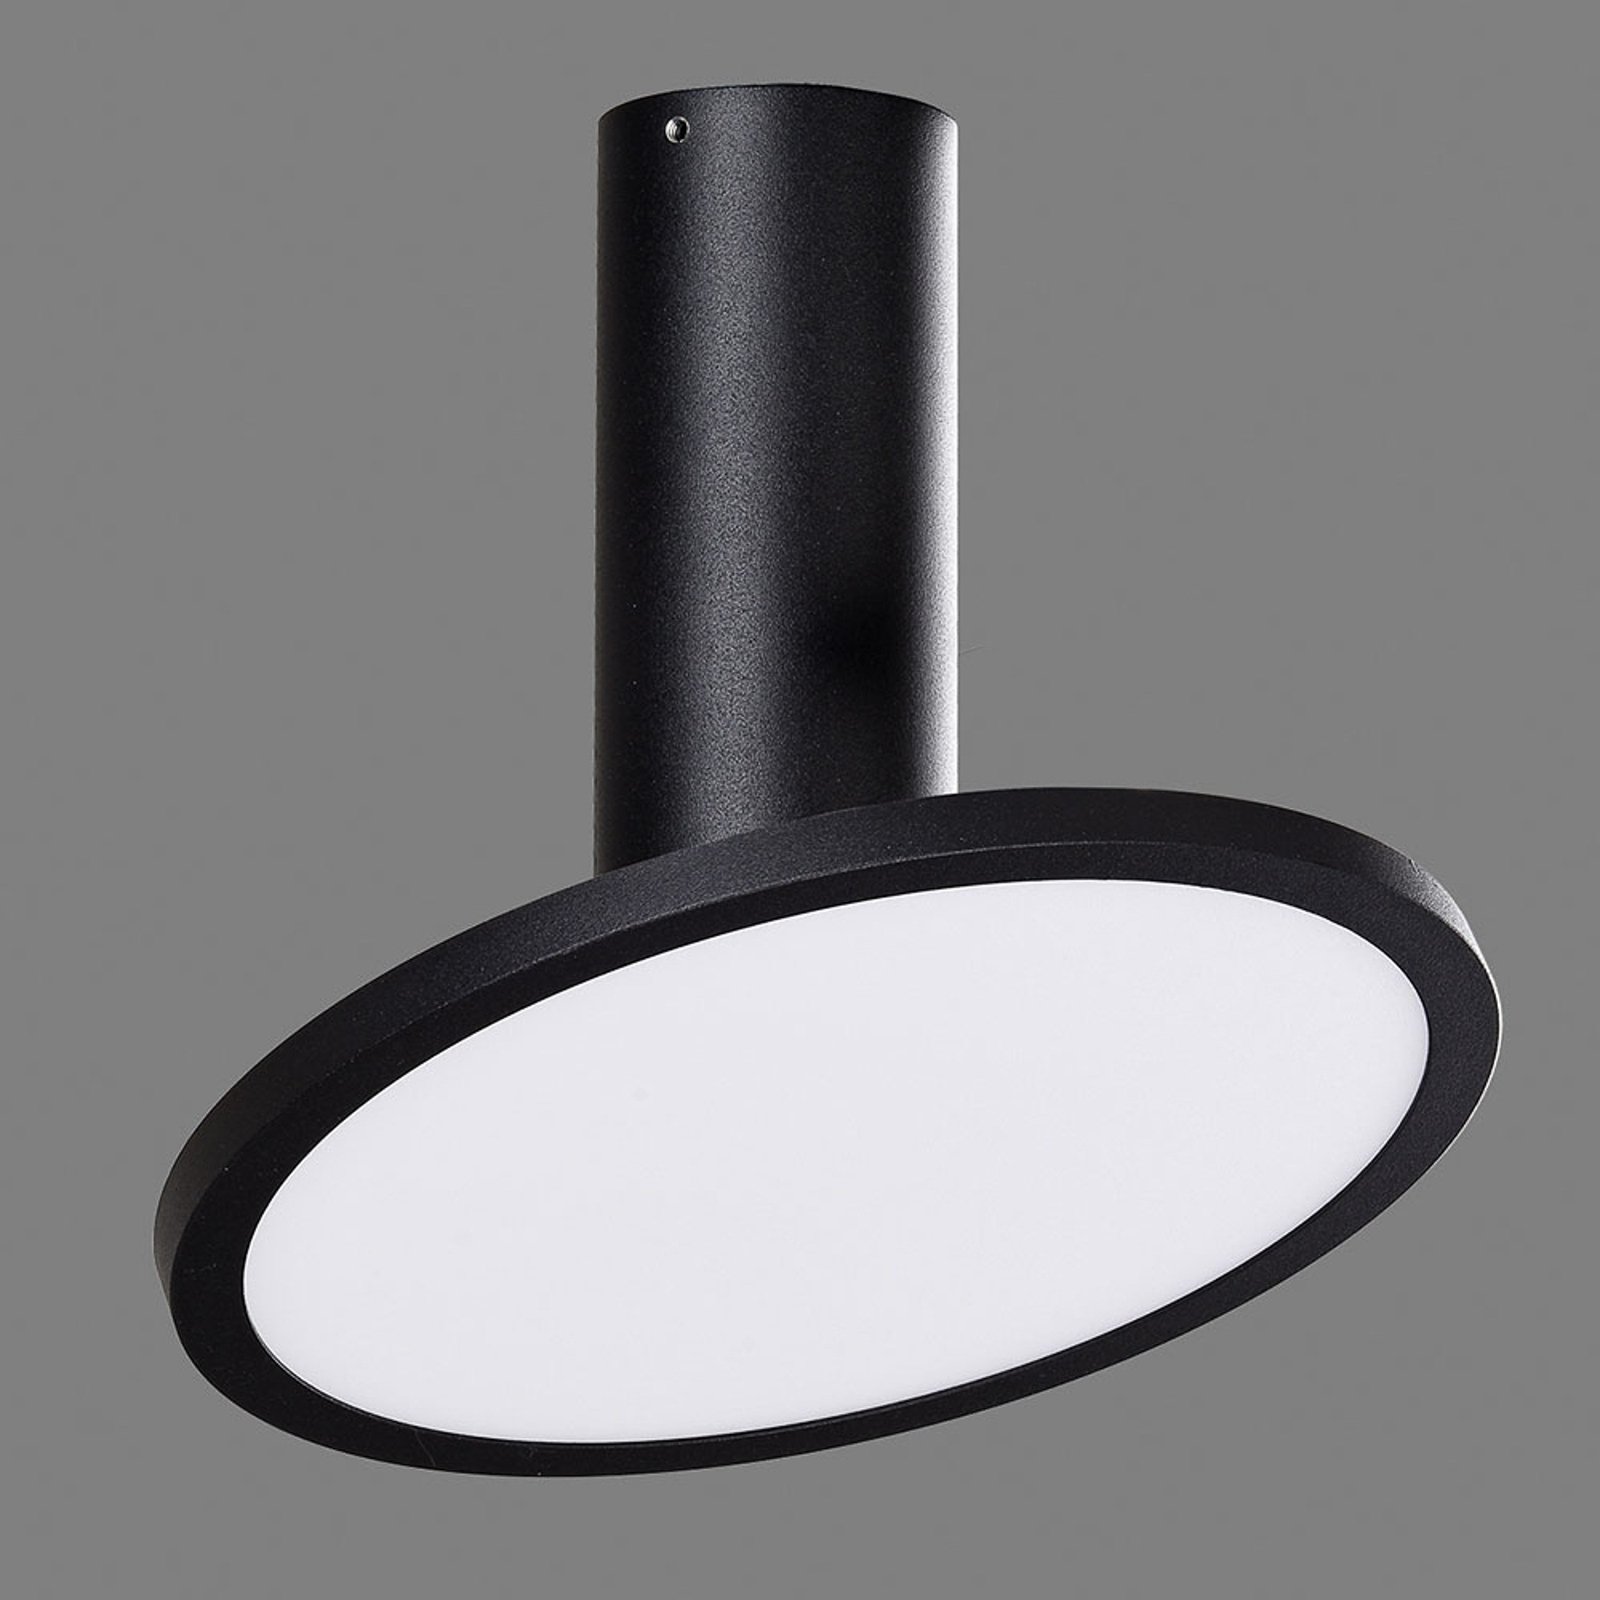 Lampa sufitowa LED Morgan, ruchoma, czarna